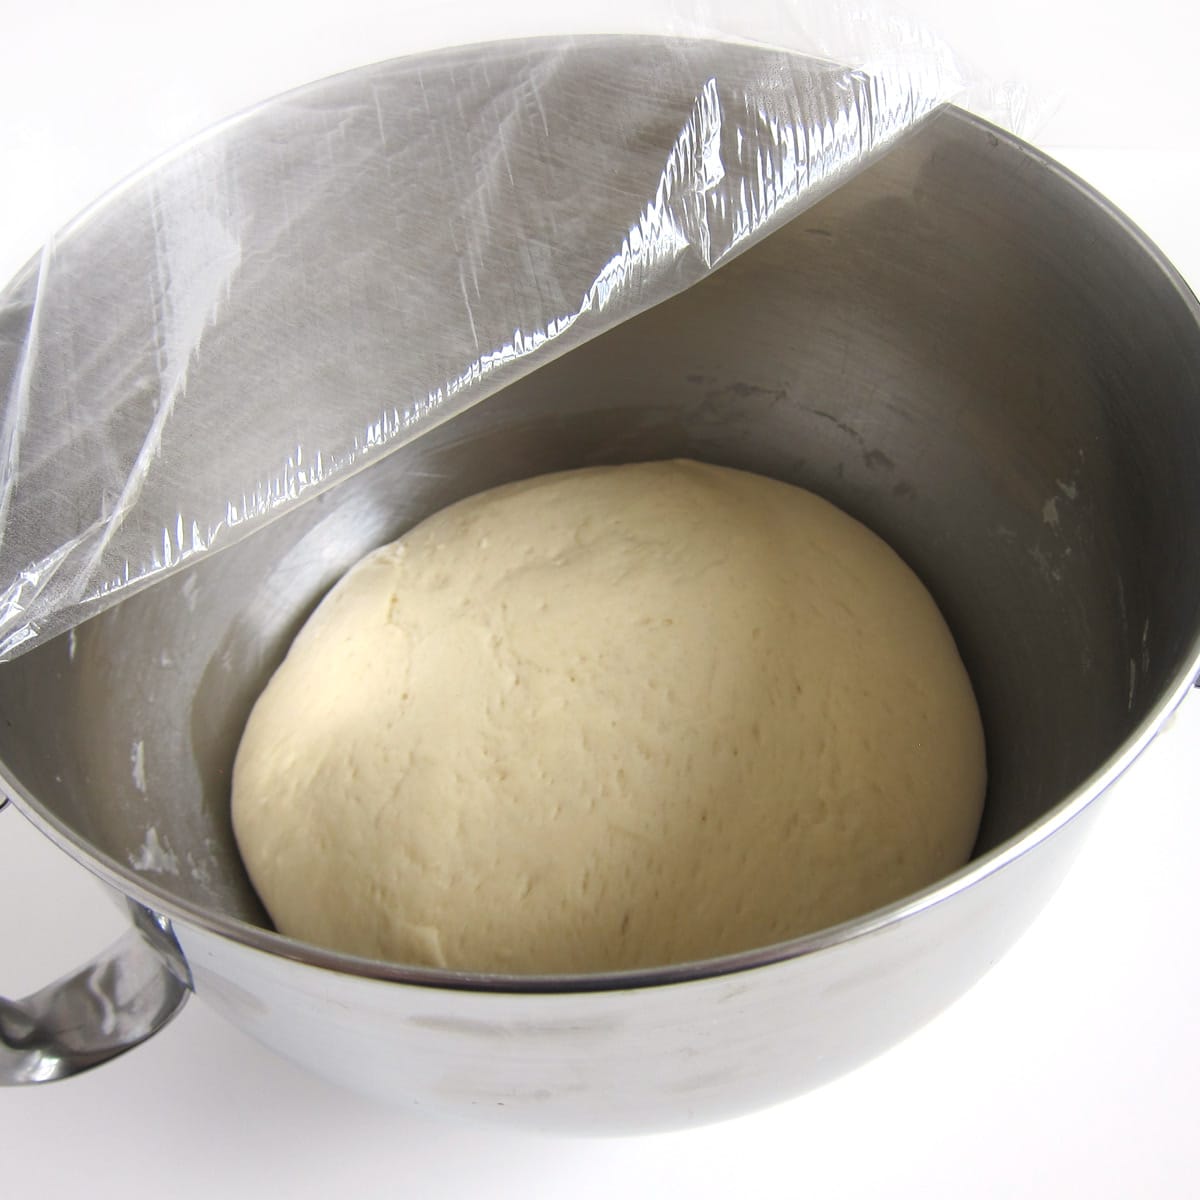 hamburger bun dough doubled in size in mixing bowl.